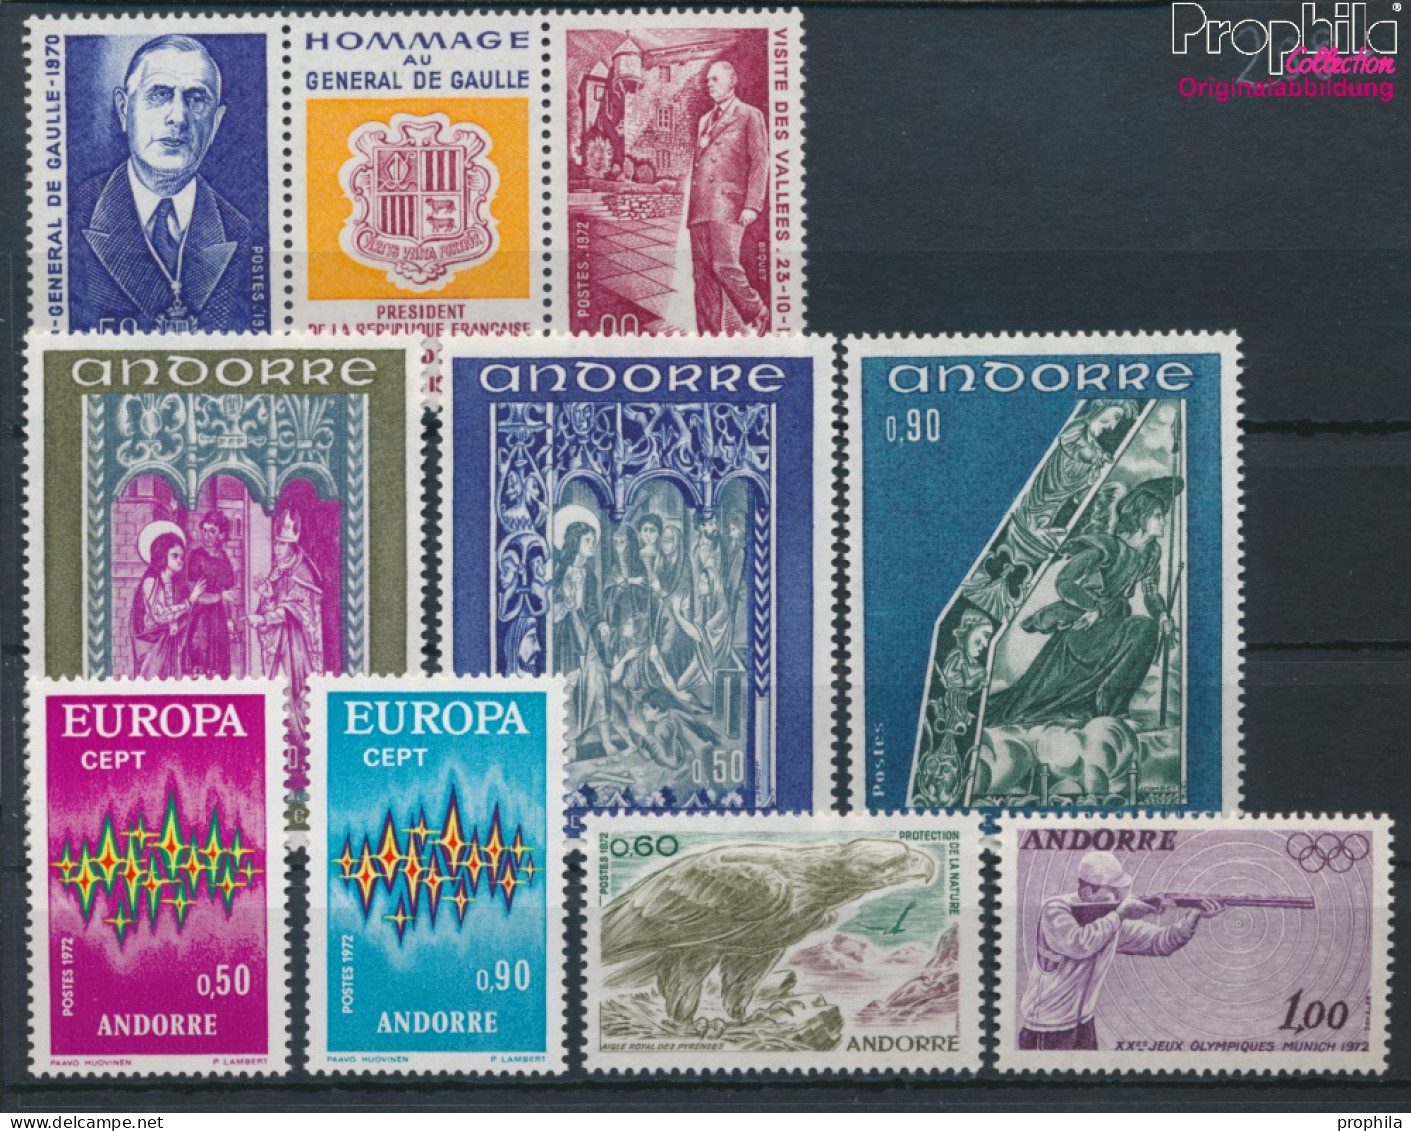 Andorra - Französische Post Postfrisch Europa 1972 Europa, Naturschutz, Olympia U.a.  (10368752 - Ongebruikt